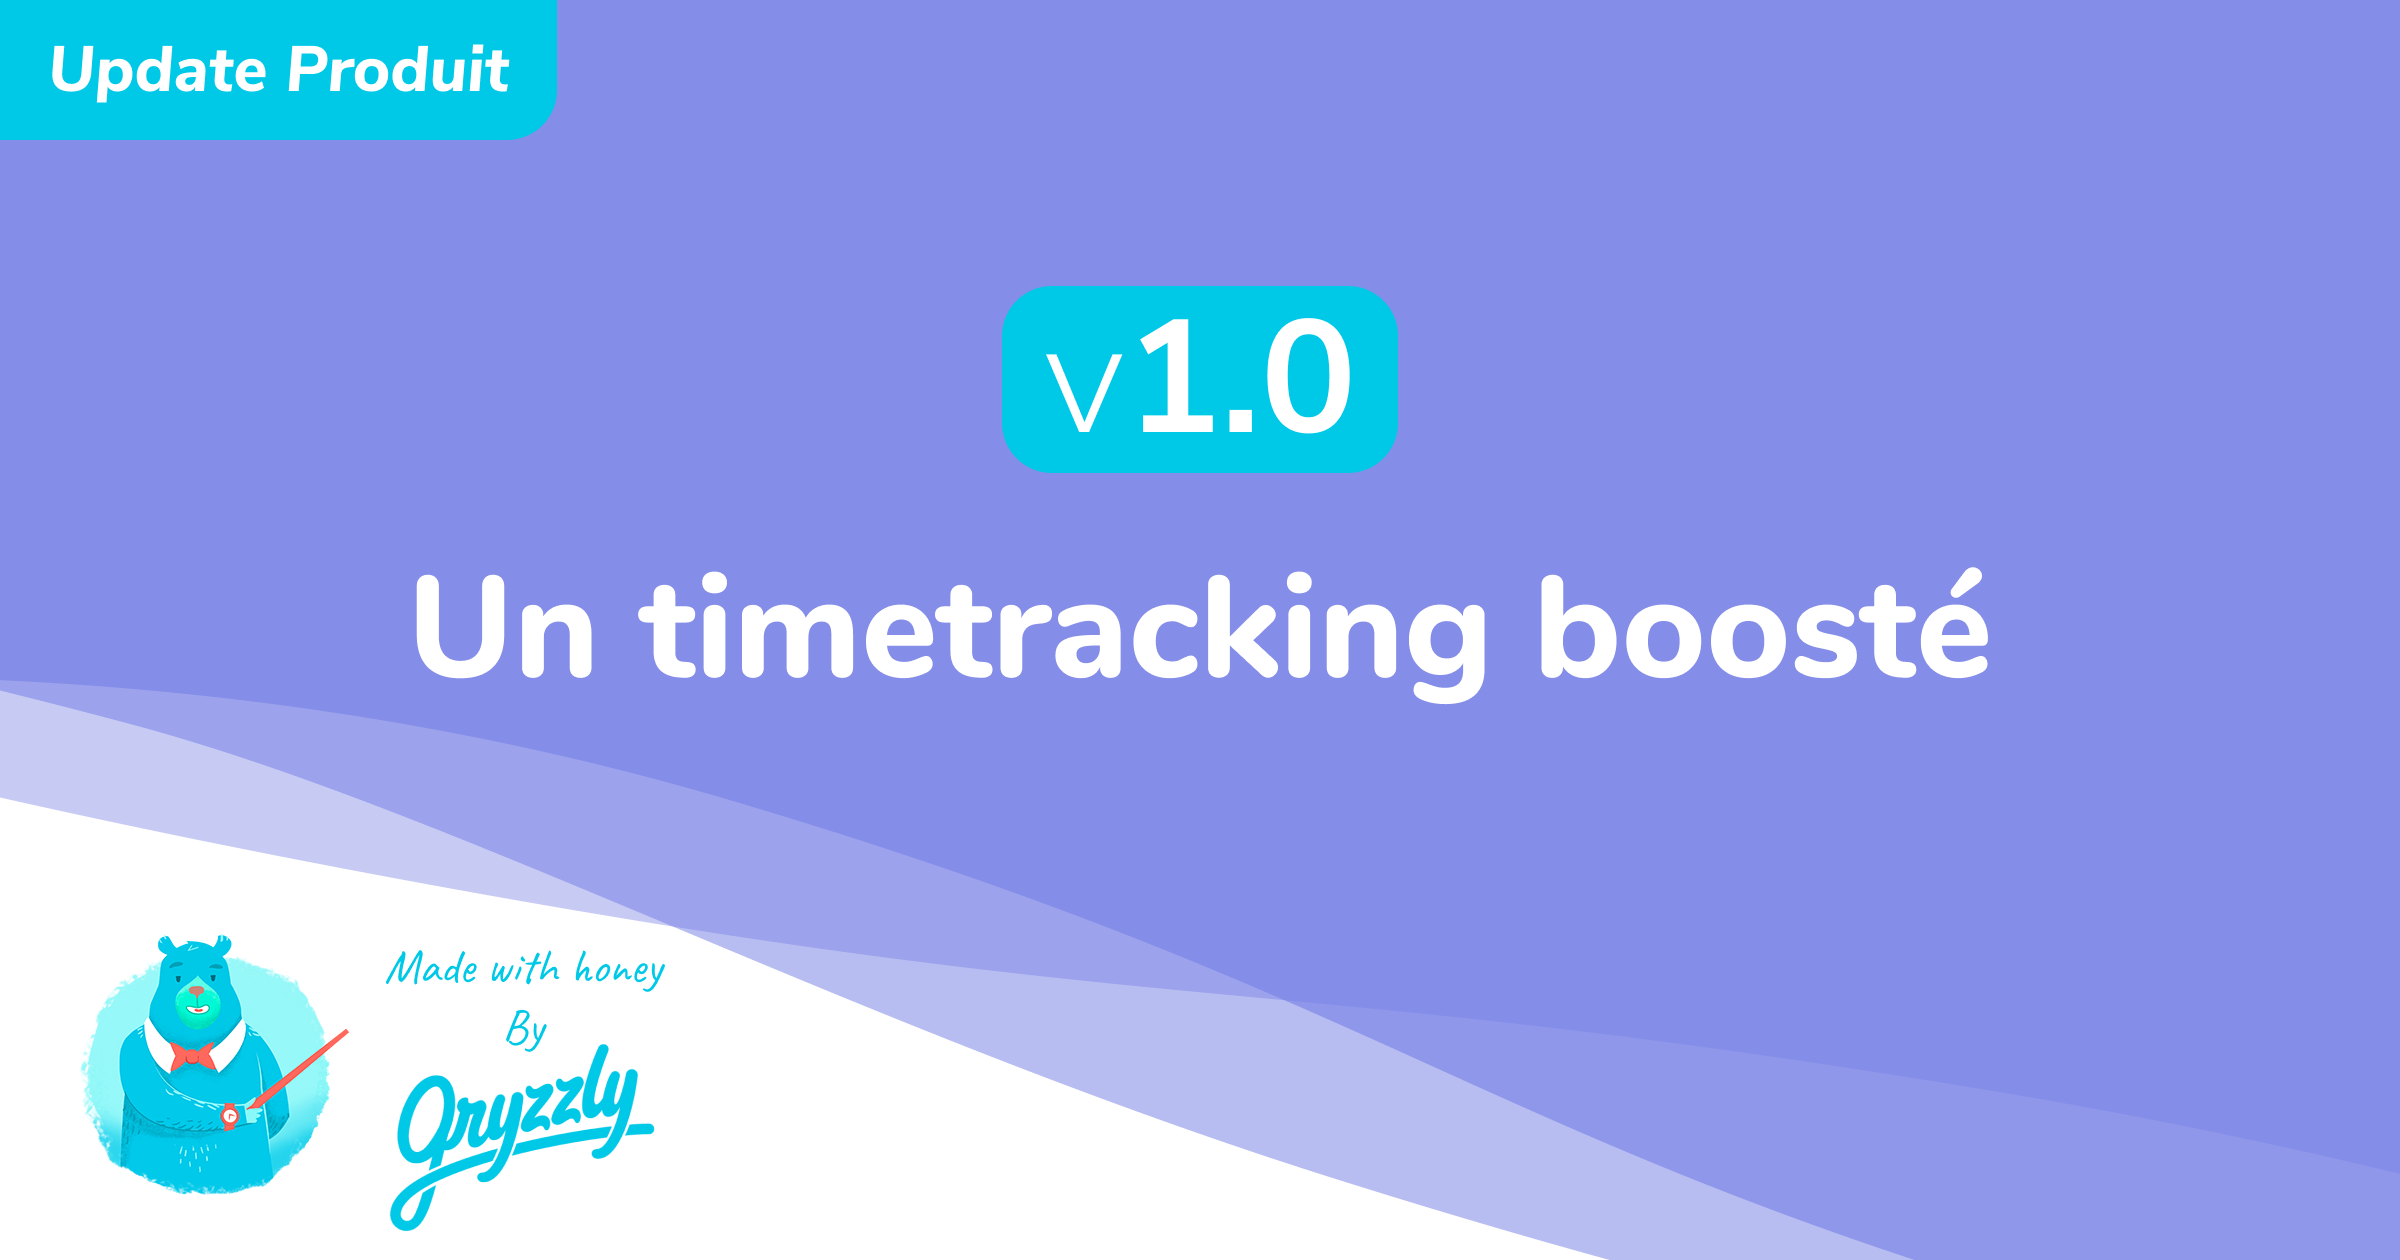 Update produit : Gryzzly Time v1.0 - un timetracking boosté